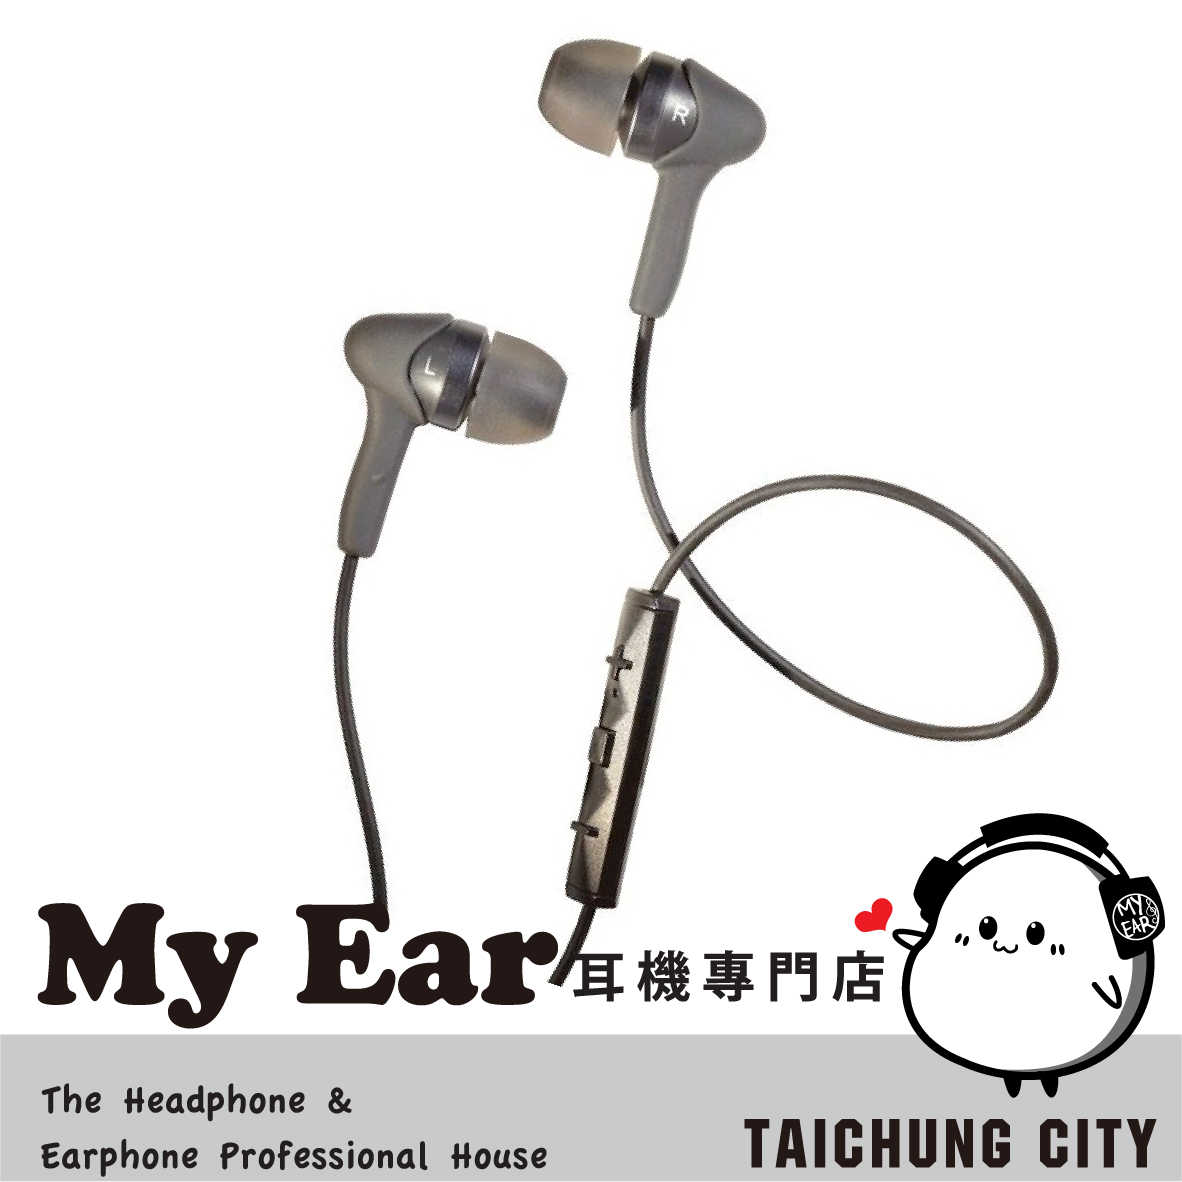 GRADO 歌德 iGe3 麥克風 鍵控 安卓 iOS 語音助手 入耳式 耳機 | My Ear 耳機專門店